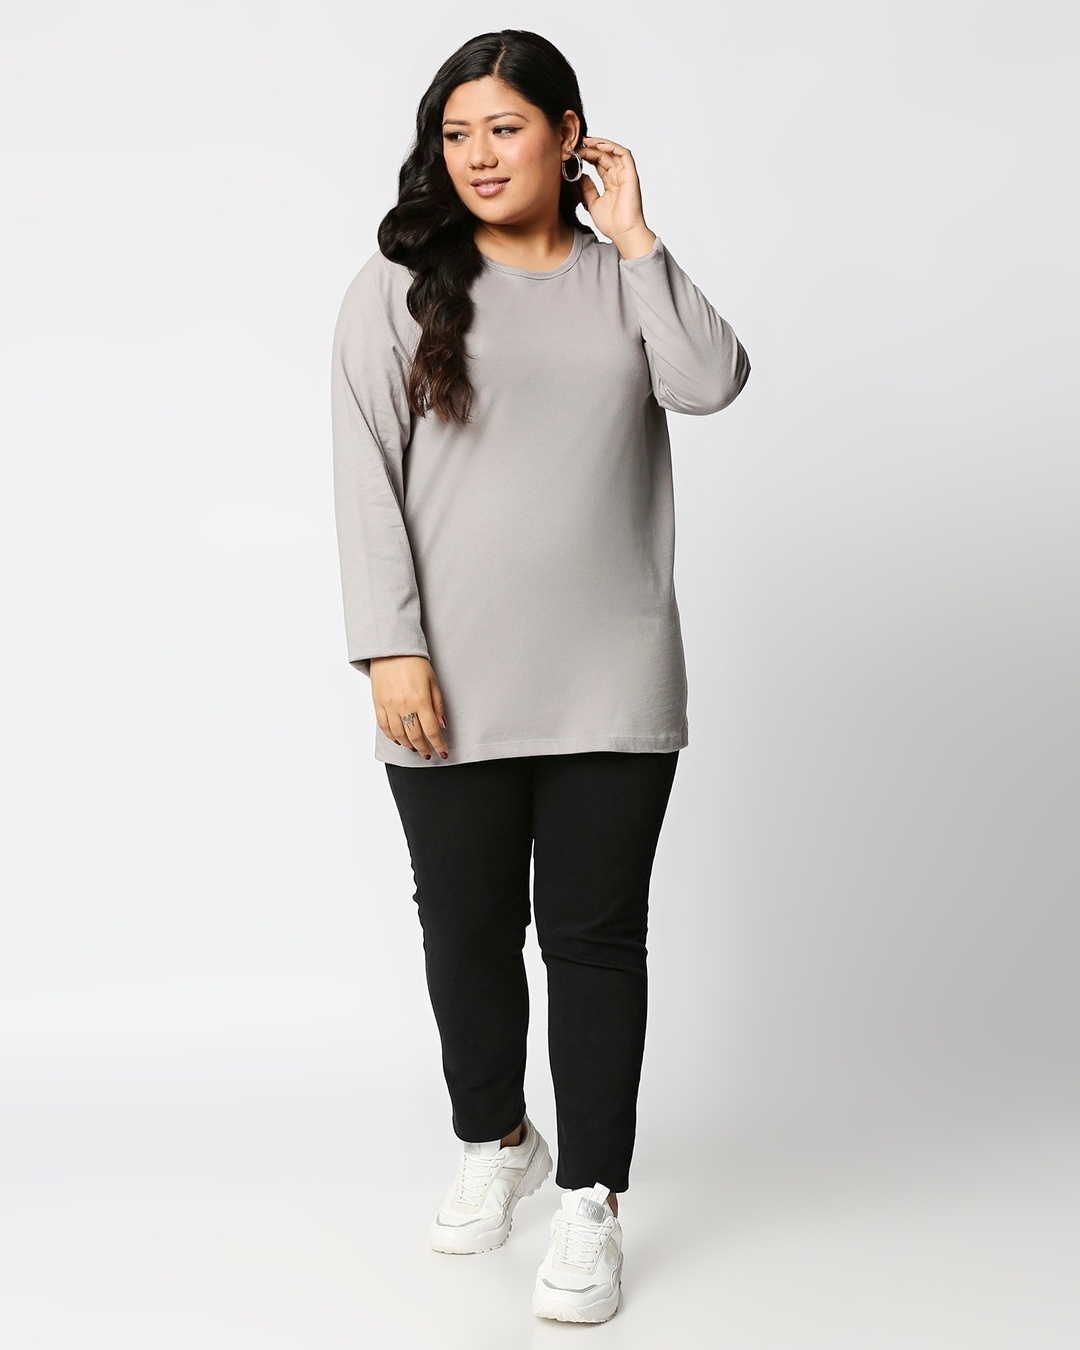 Shop Meteor Grey Full Sleeve Plus Size T-Shirt